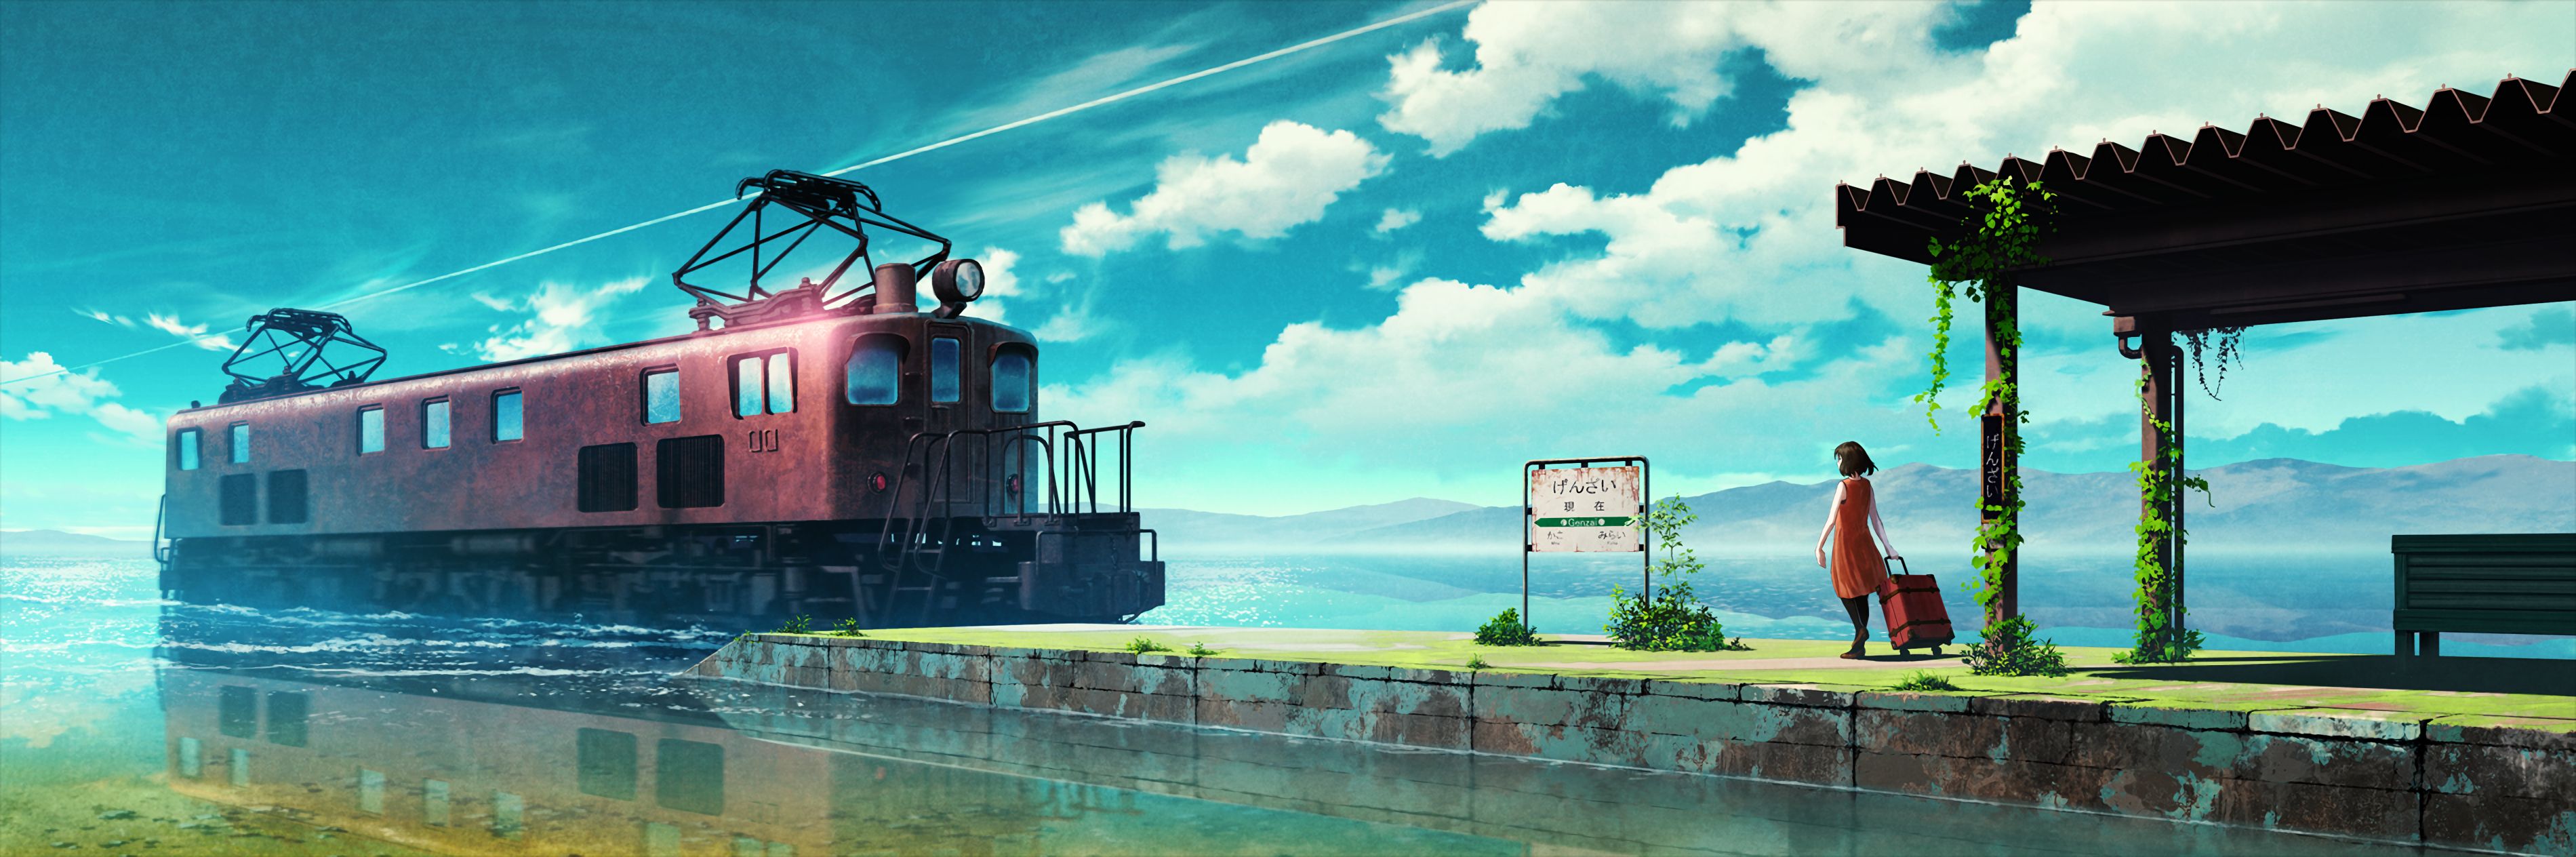 Anime Train Station Background